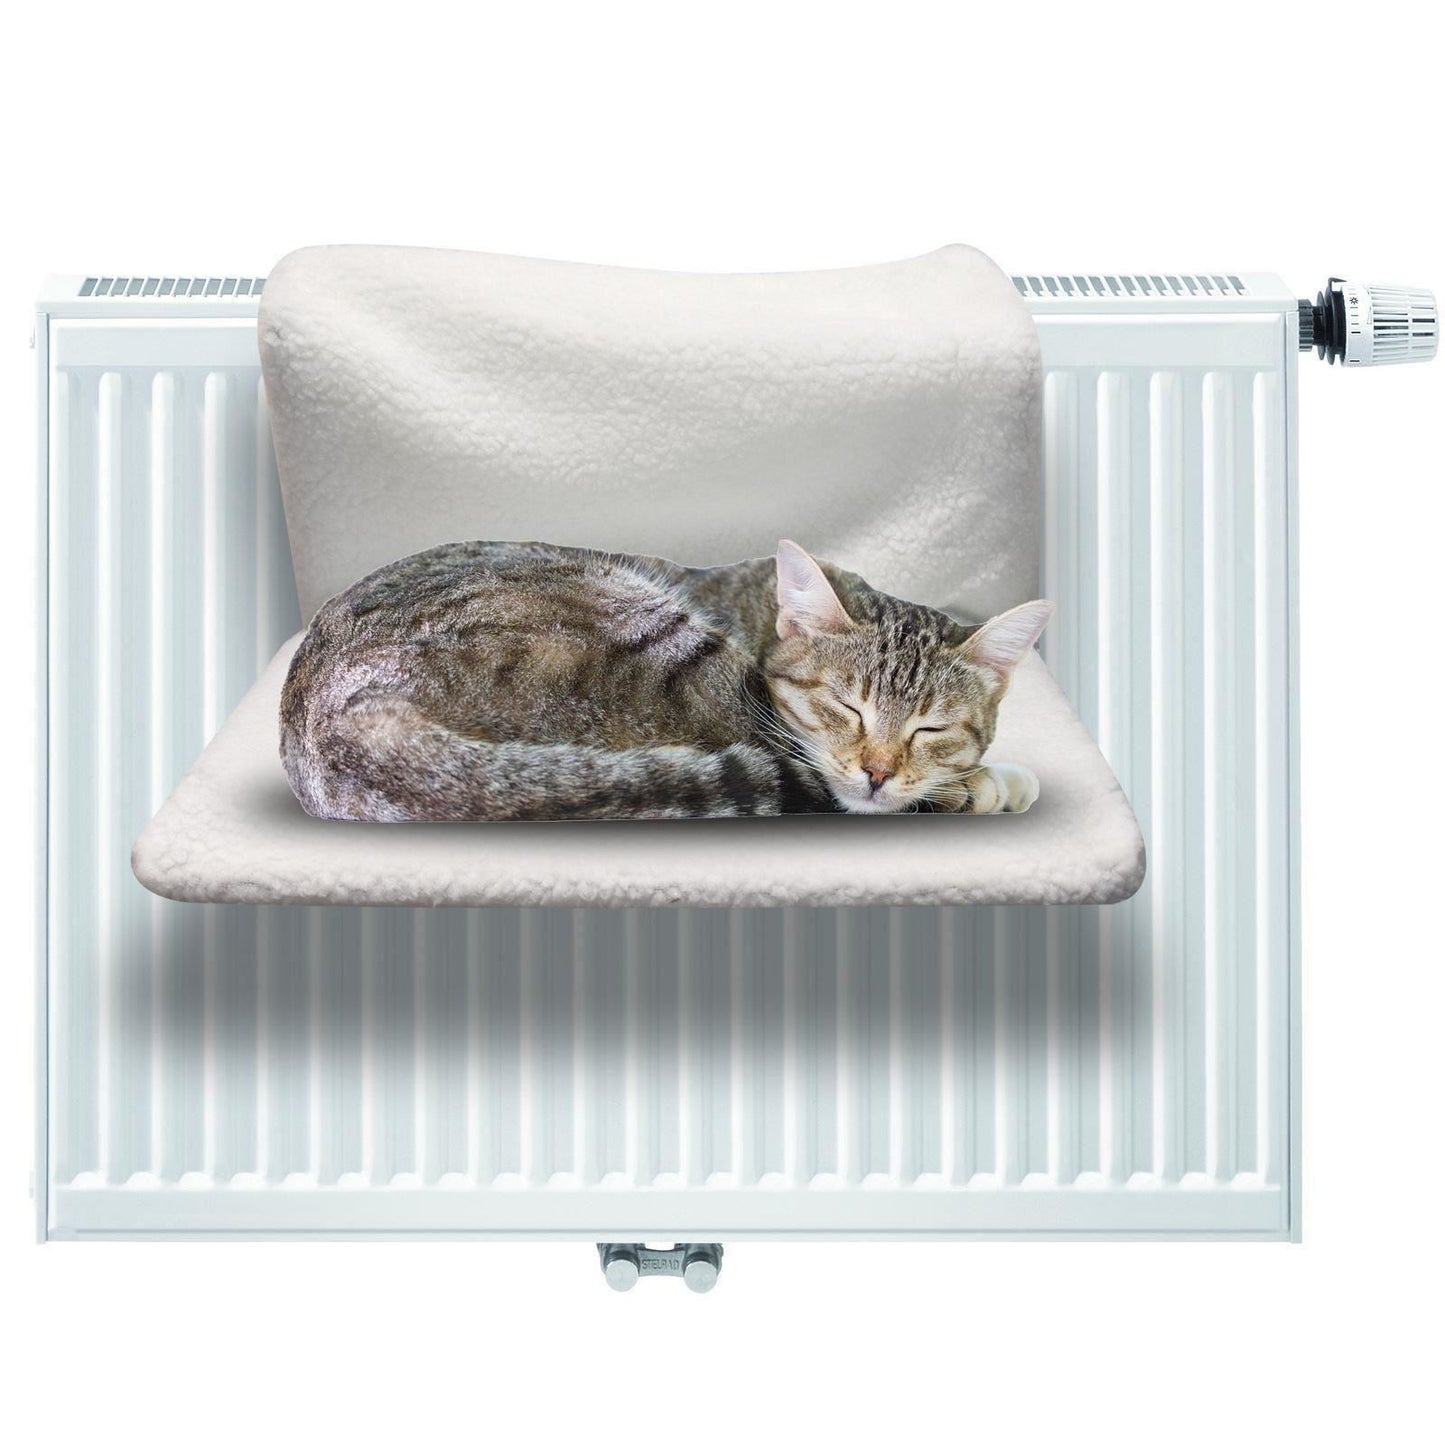 Cozy Cat Bed that Hangs on Radiators